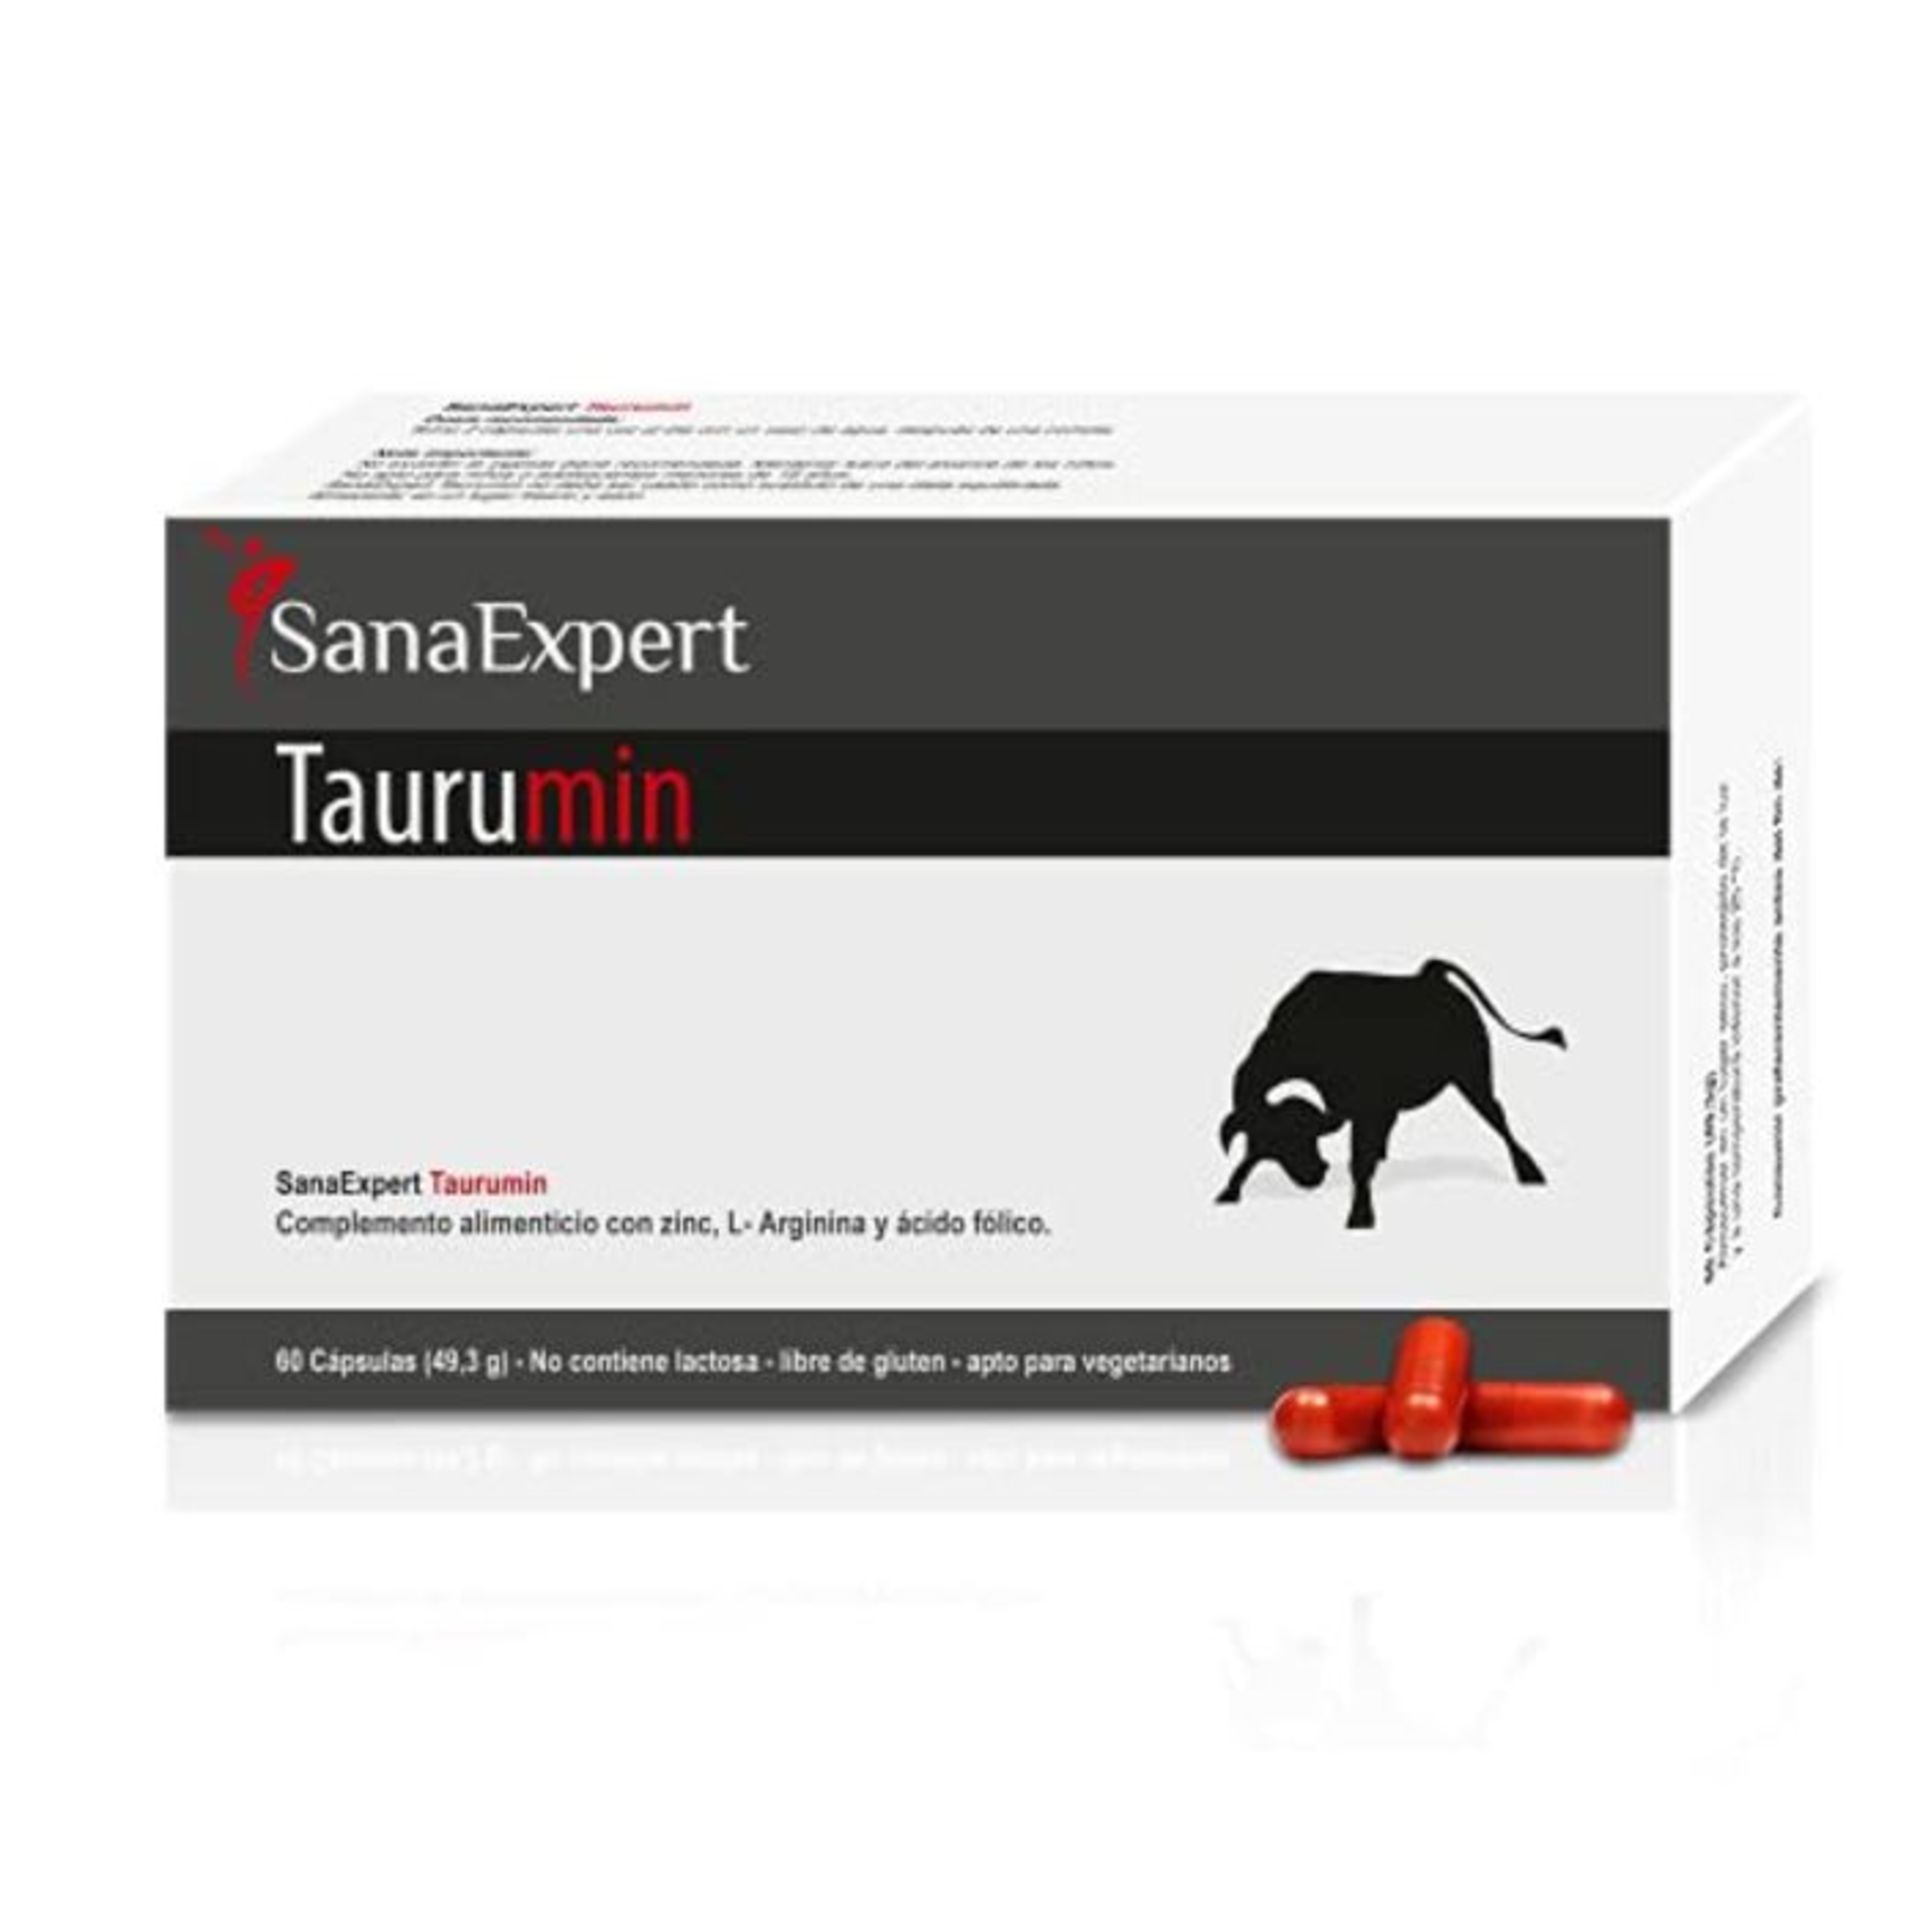 SanaExpert Taurumine with L-arginine, Alpha-liponic Acid, zinc, folic Acid, Fertility